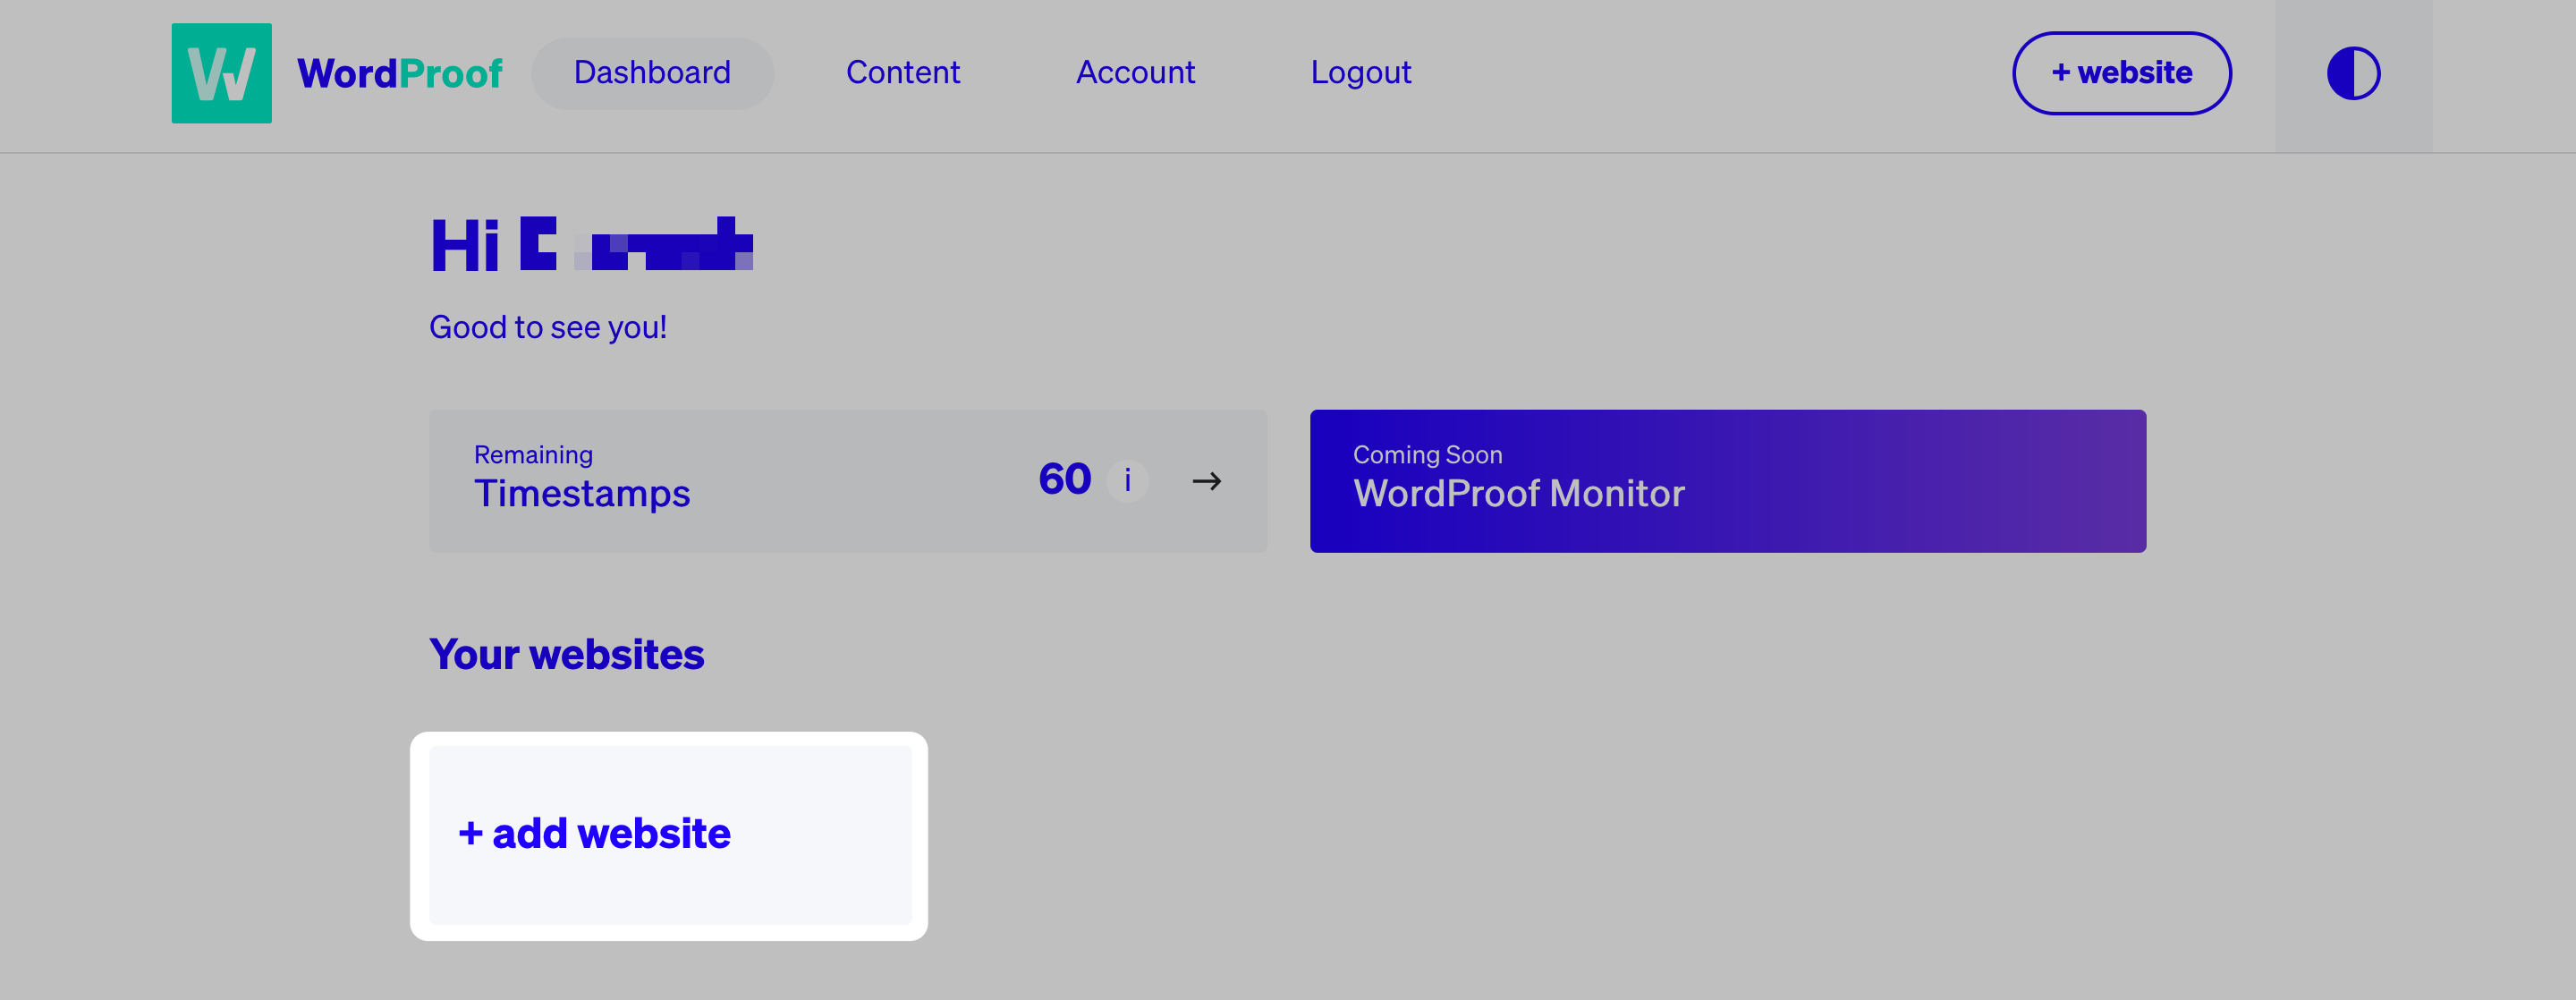 The WordProof dashboard.